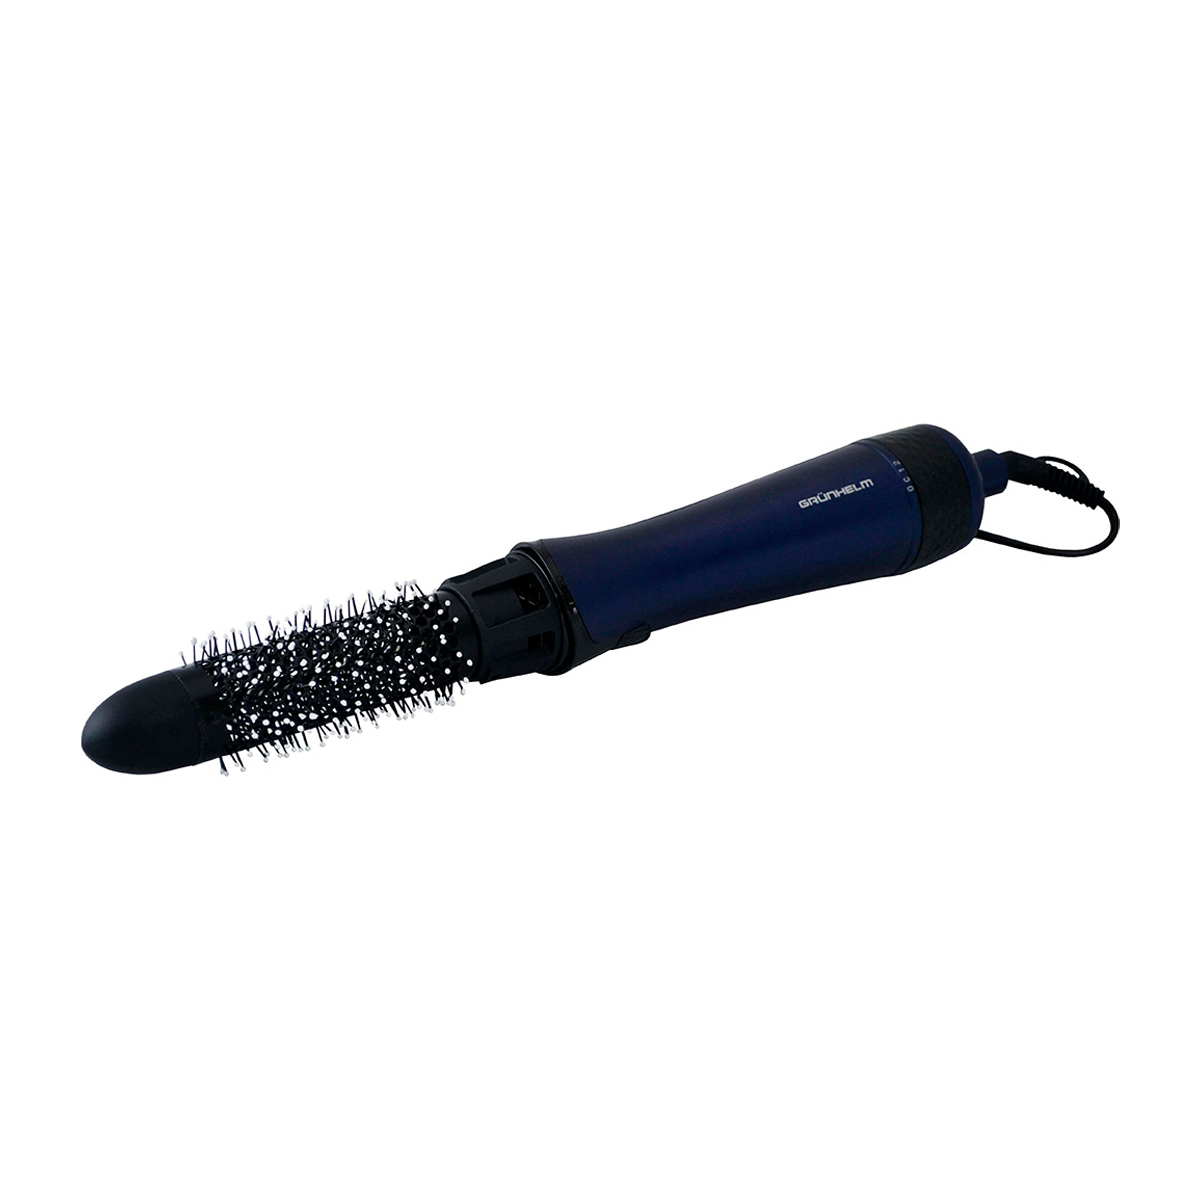 Фен-щетка для сушки и укладки волос GHA-819 (синяя)